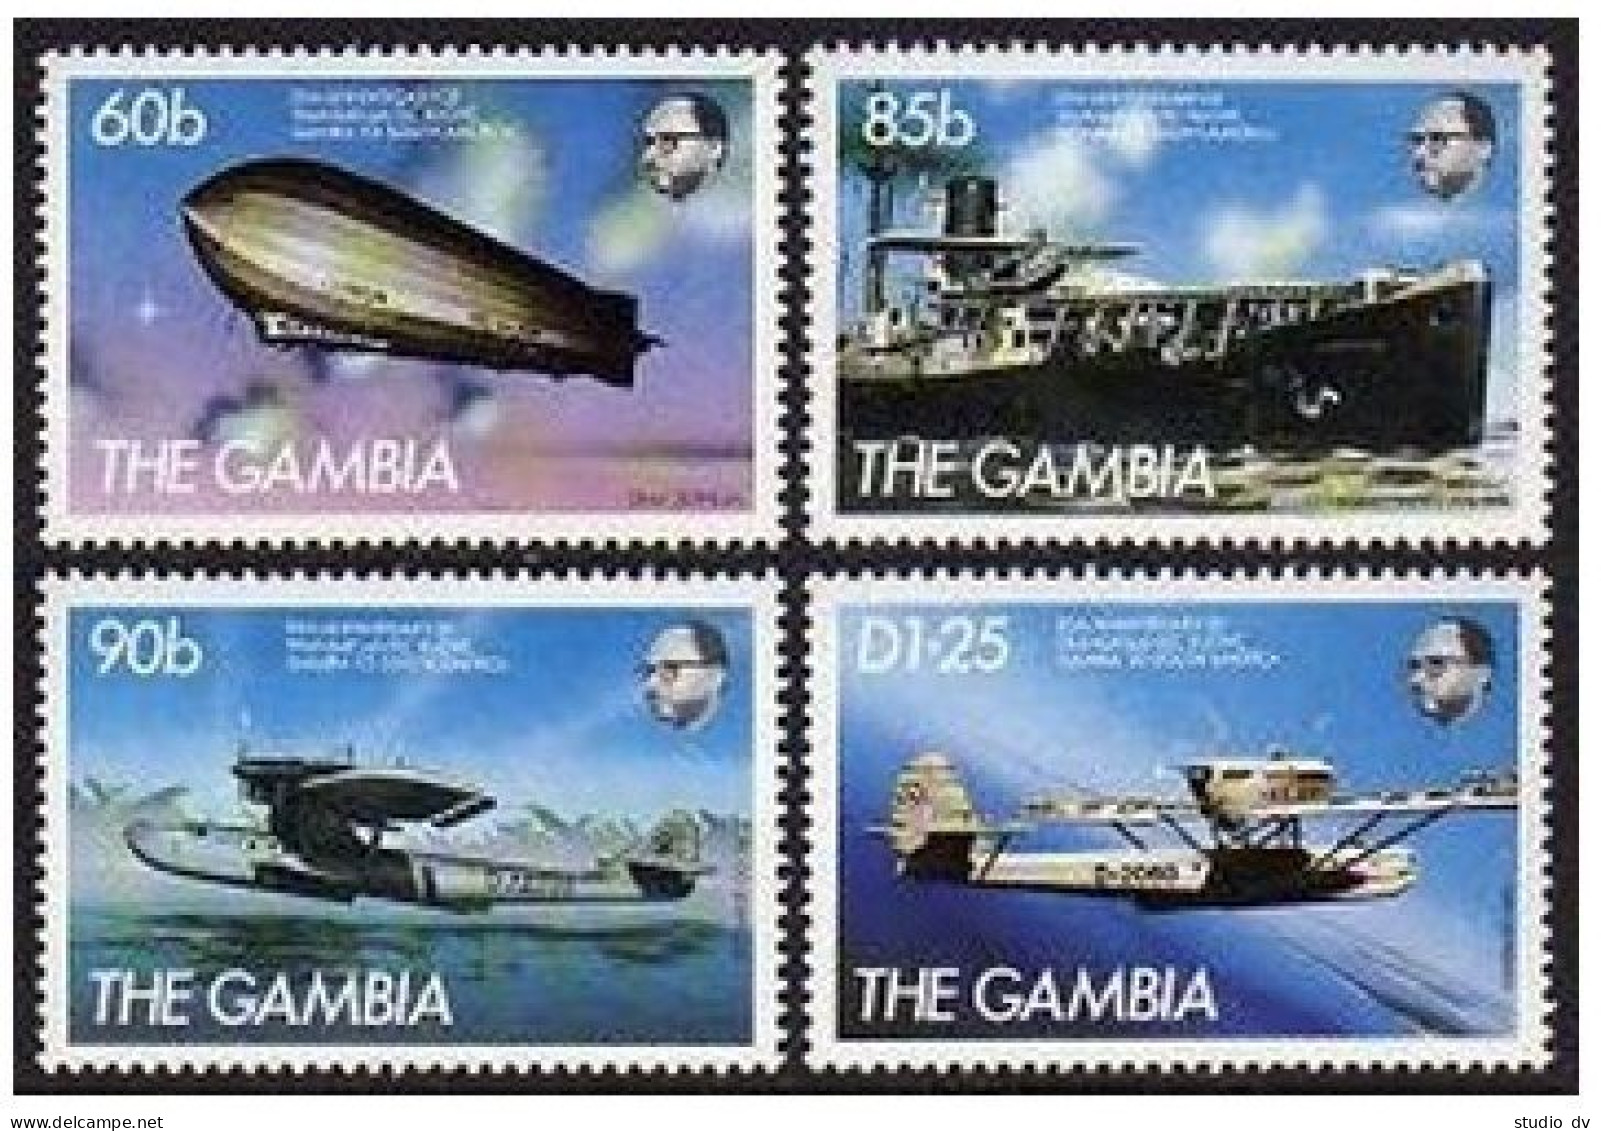 Gambia 529-532, MNH. Mi 535-538. Flight Gambia-South America,50, 1984. Aircraft. - Gambie (1965-...)